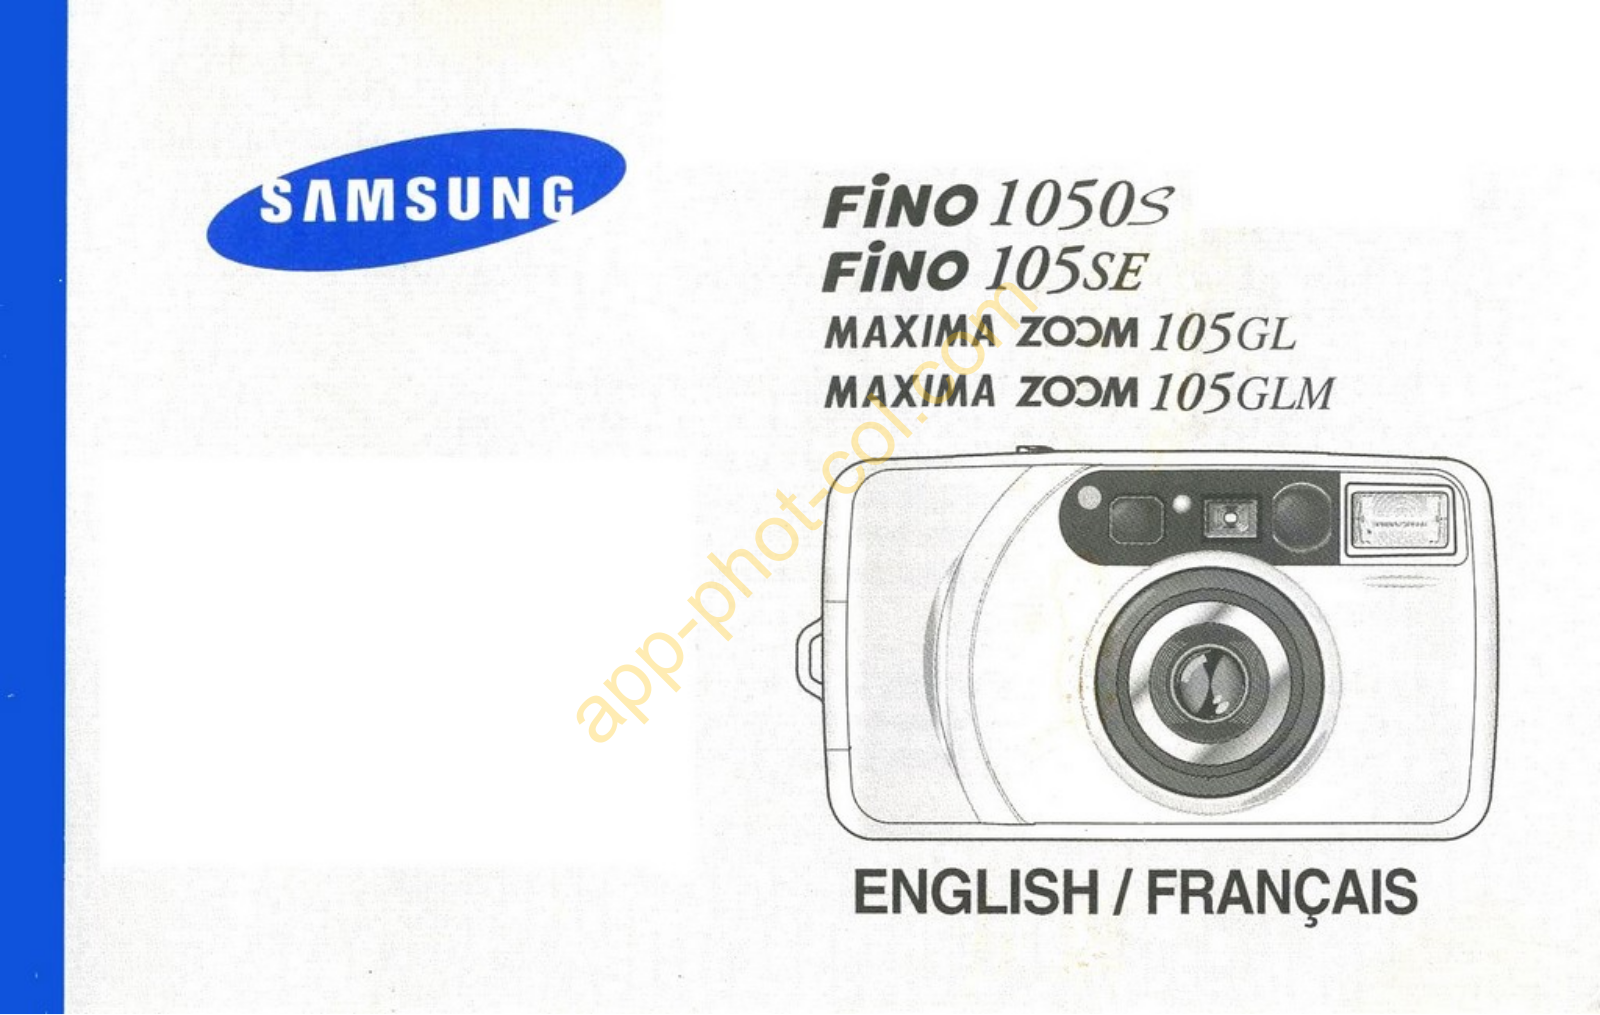 Samsung Fino 105SE Instruction Manual